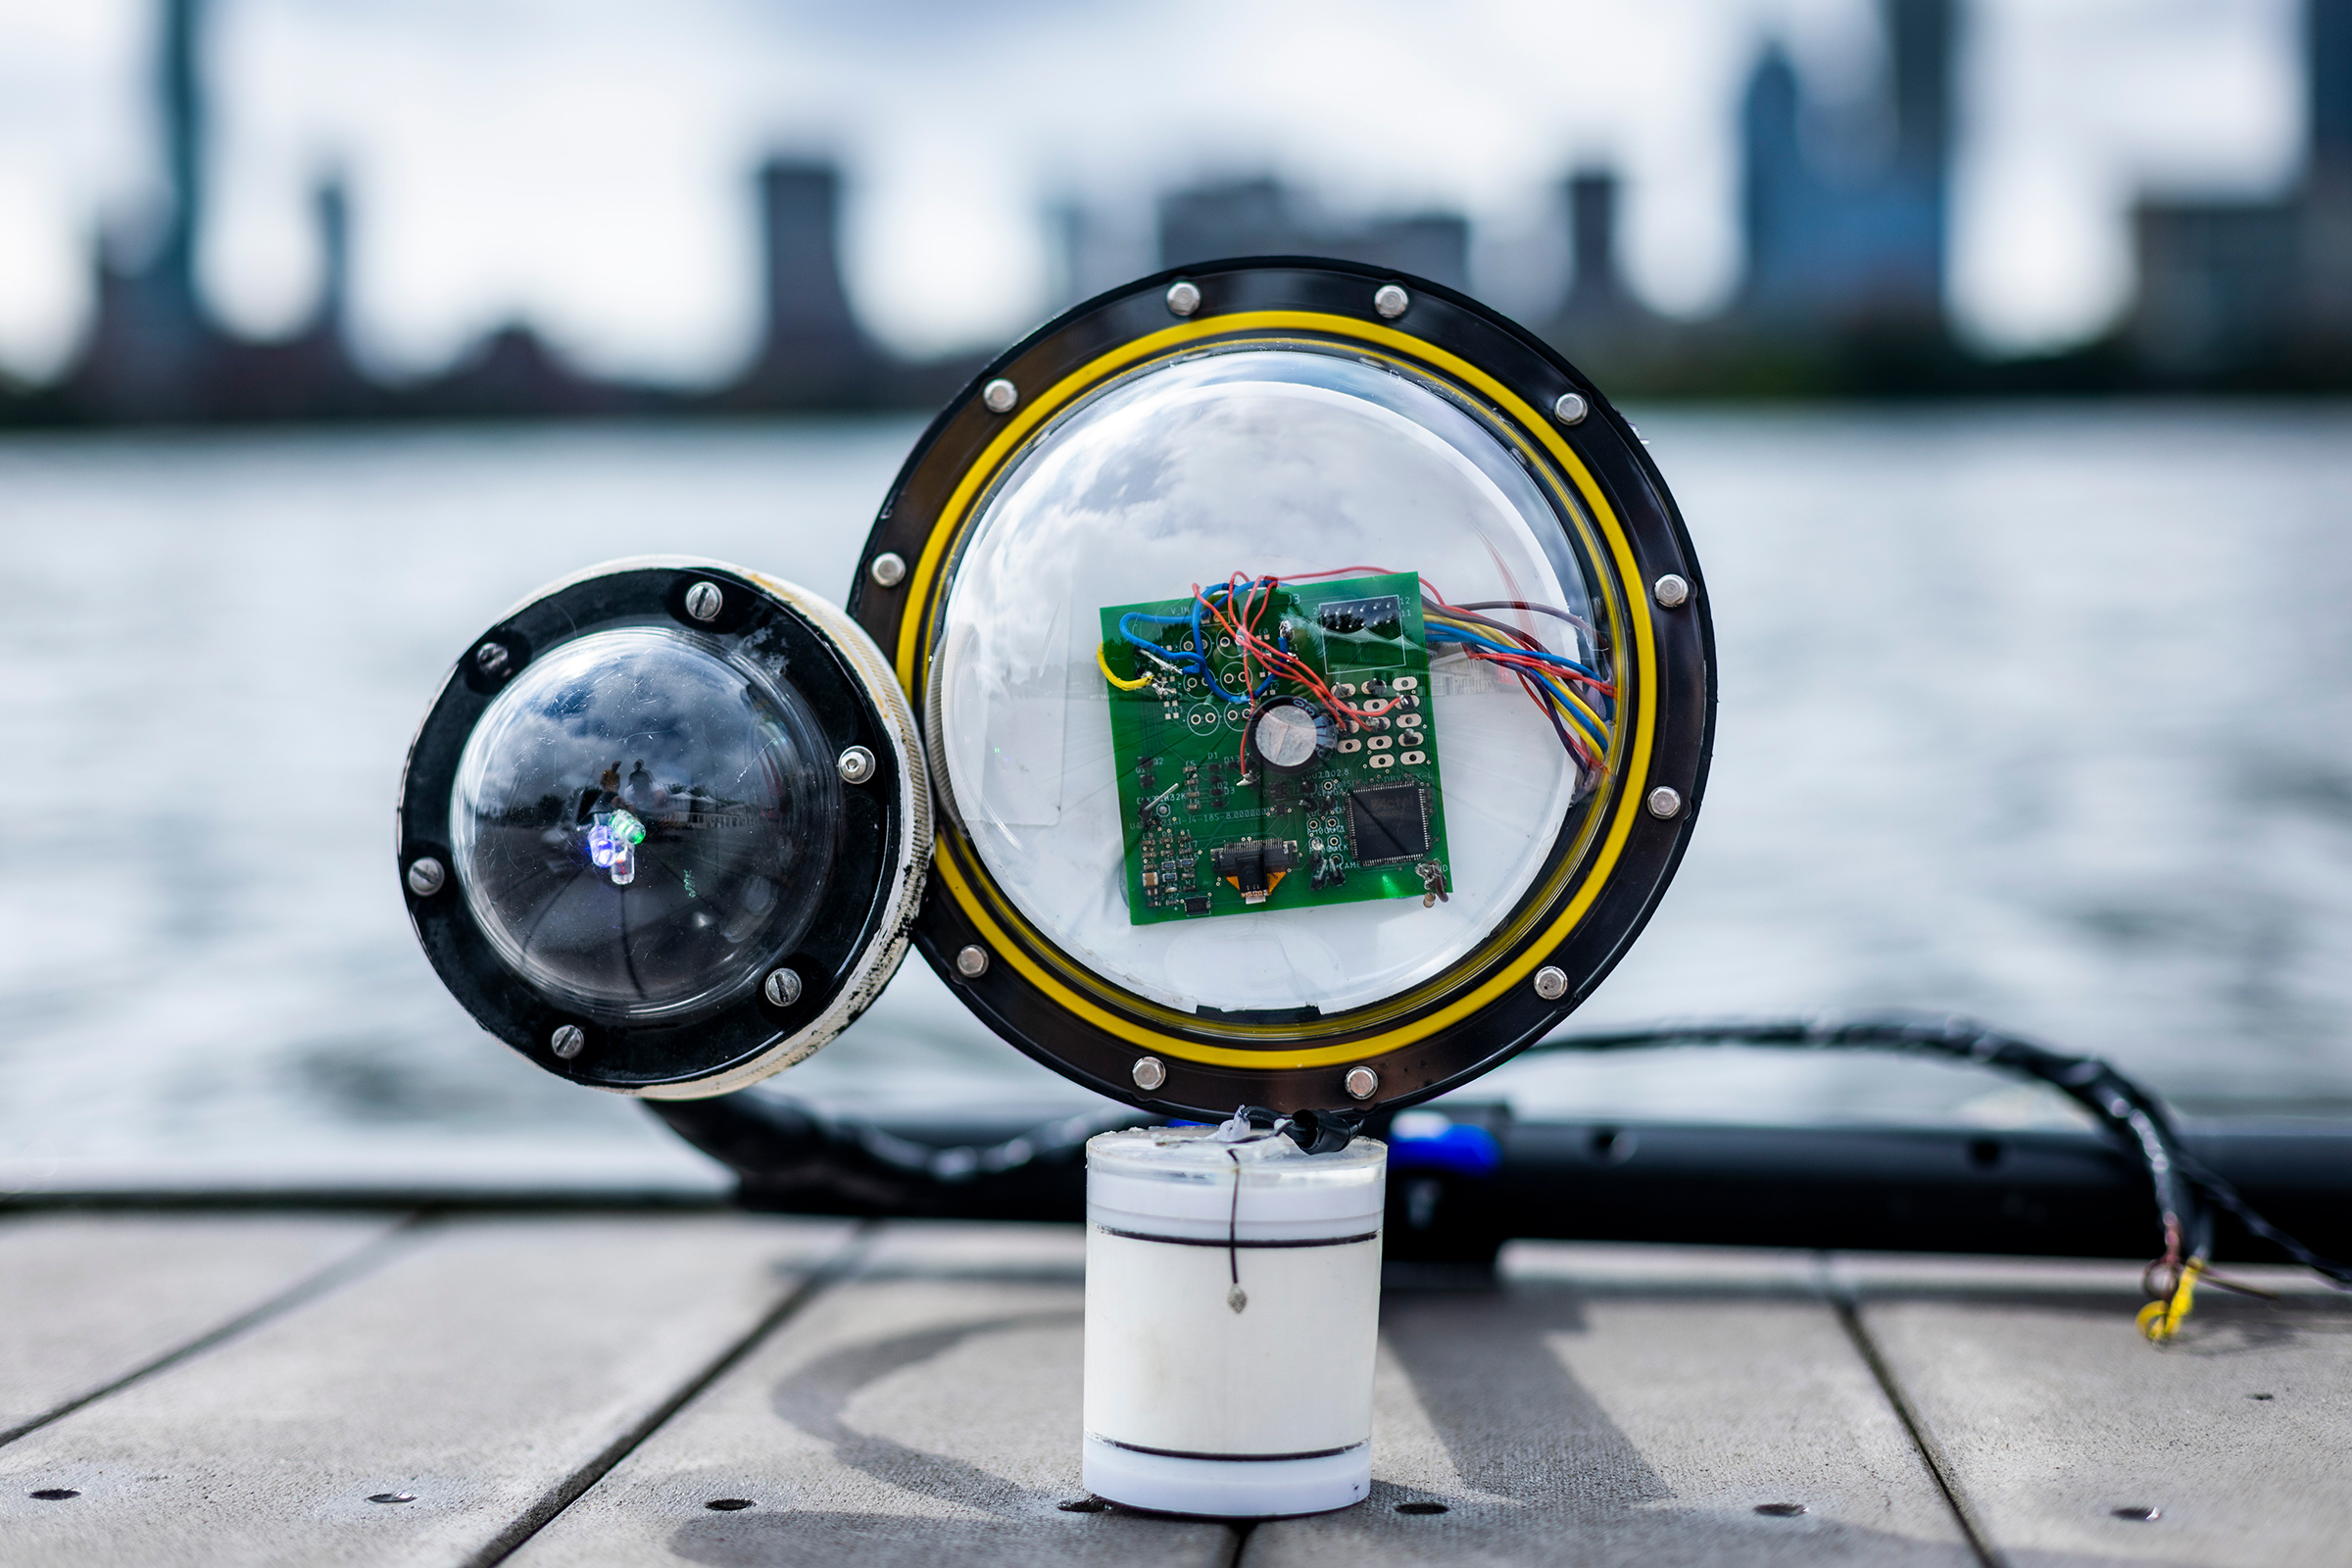 MIT engineers build a battery-free, wireless underwater camera | MIT News